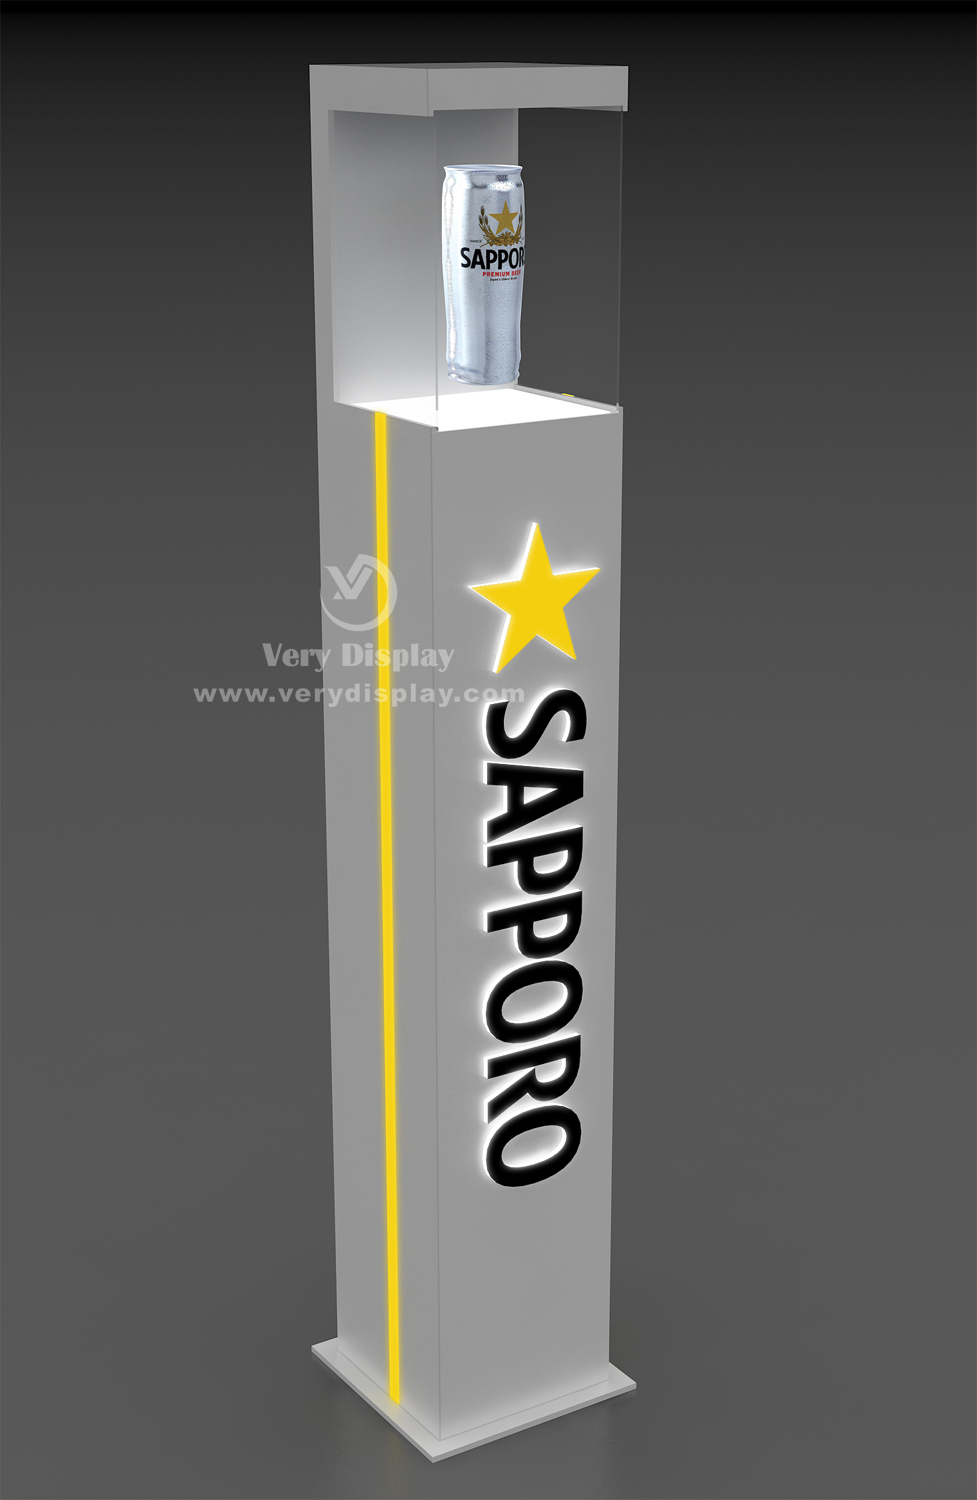 Sapporo Bar Light Display Stand